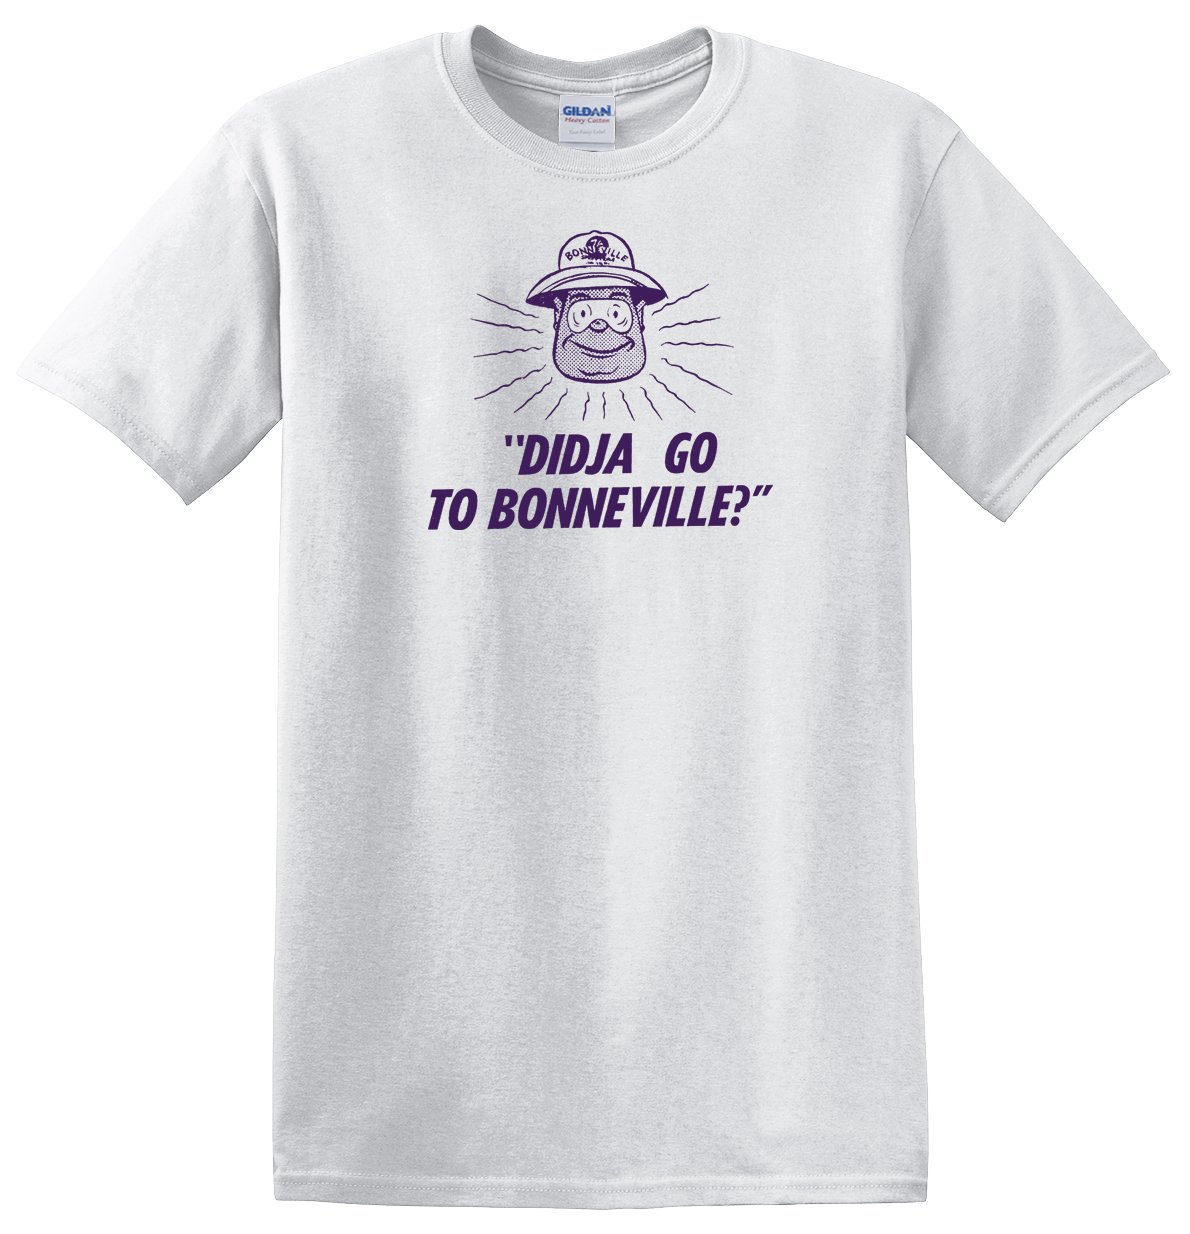 Did Ya Go to Bonneville? T-shirt